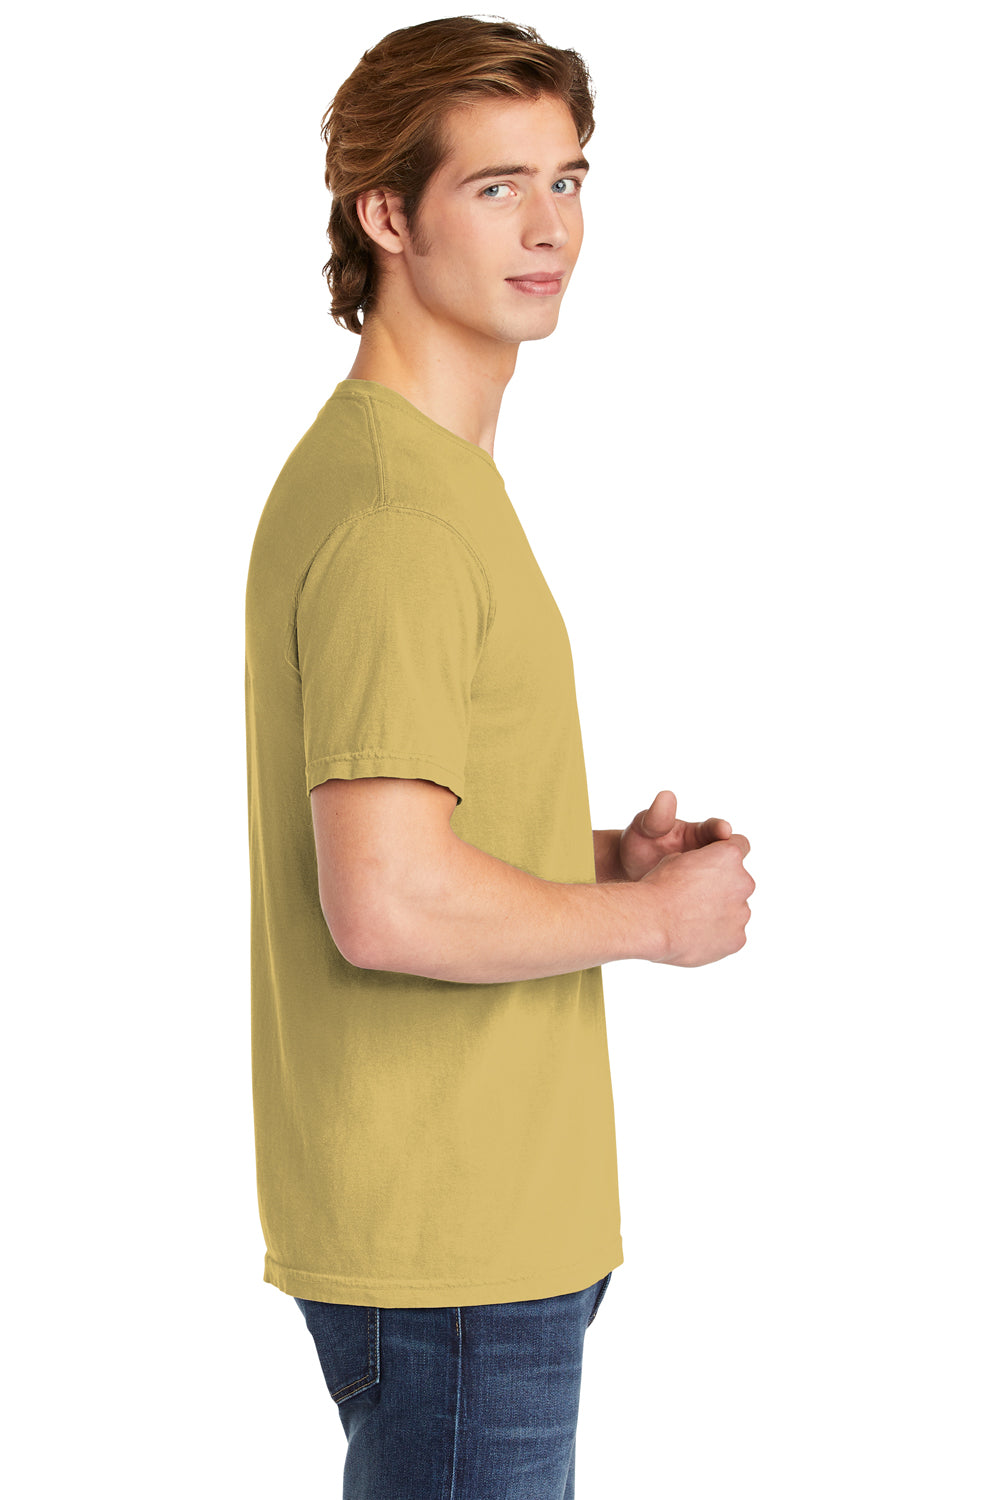 Comfort Colors 1717/C1717 Mens Short Sleeve Crewneck T-Shirt Mustard Yellow Side